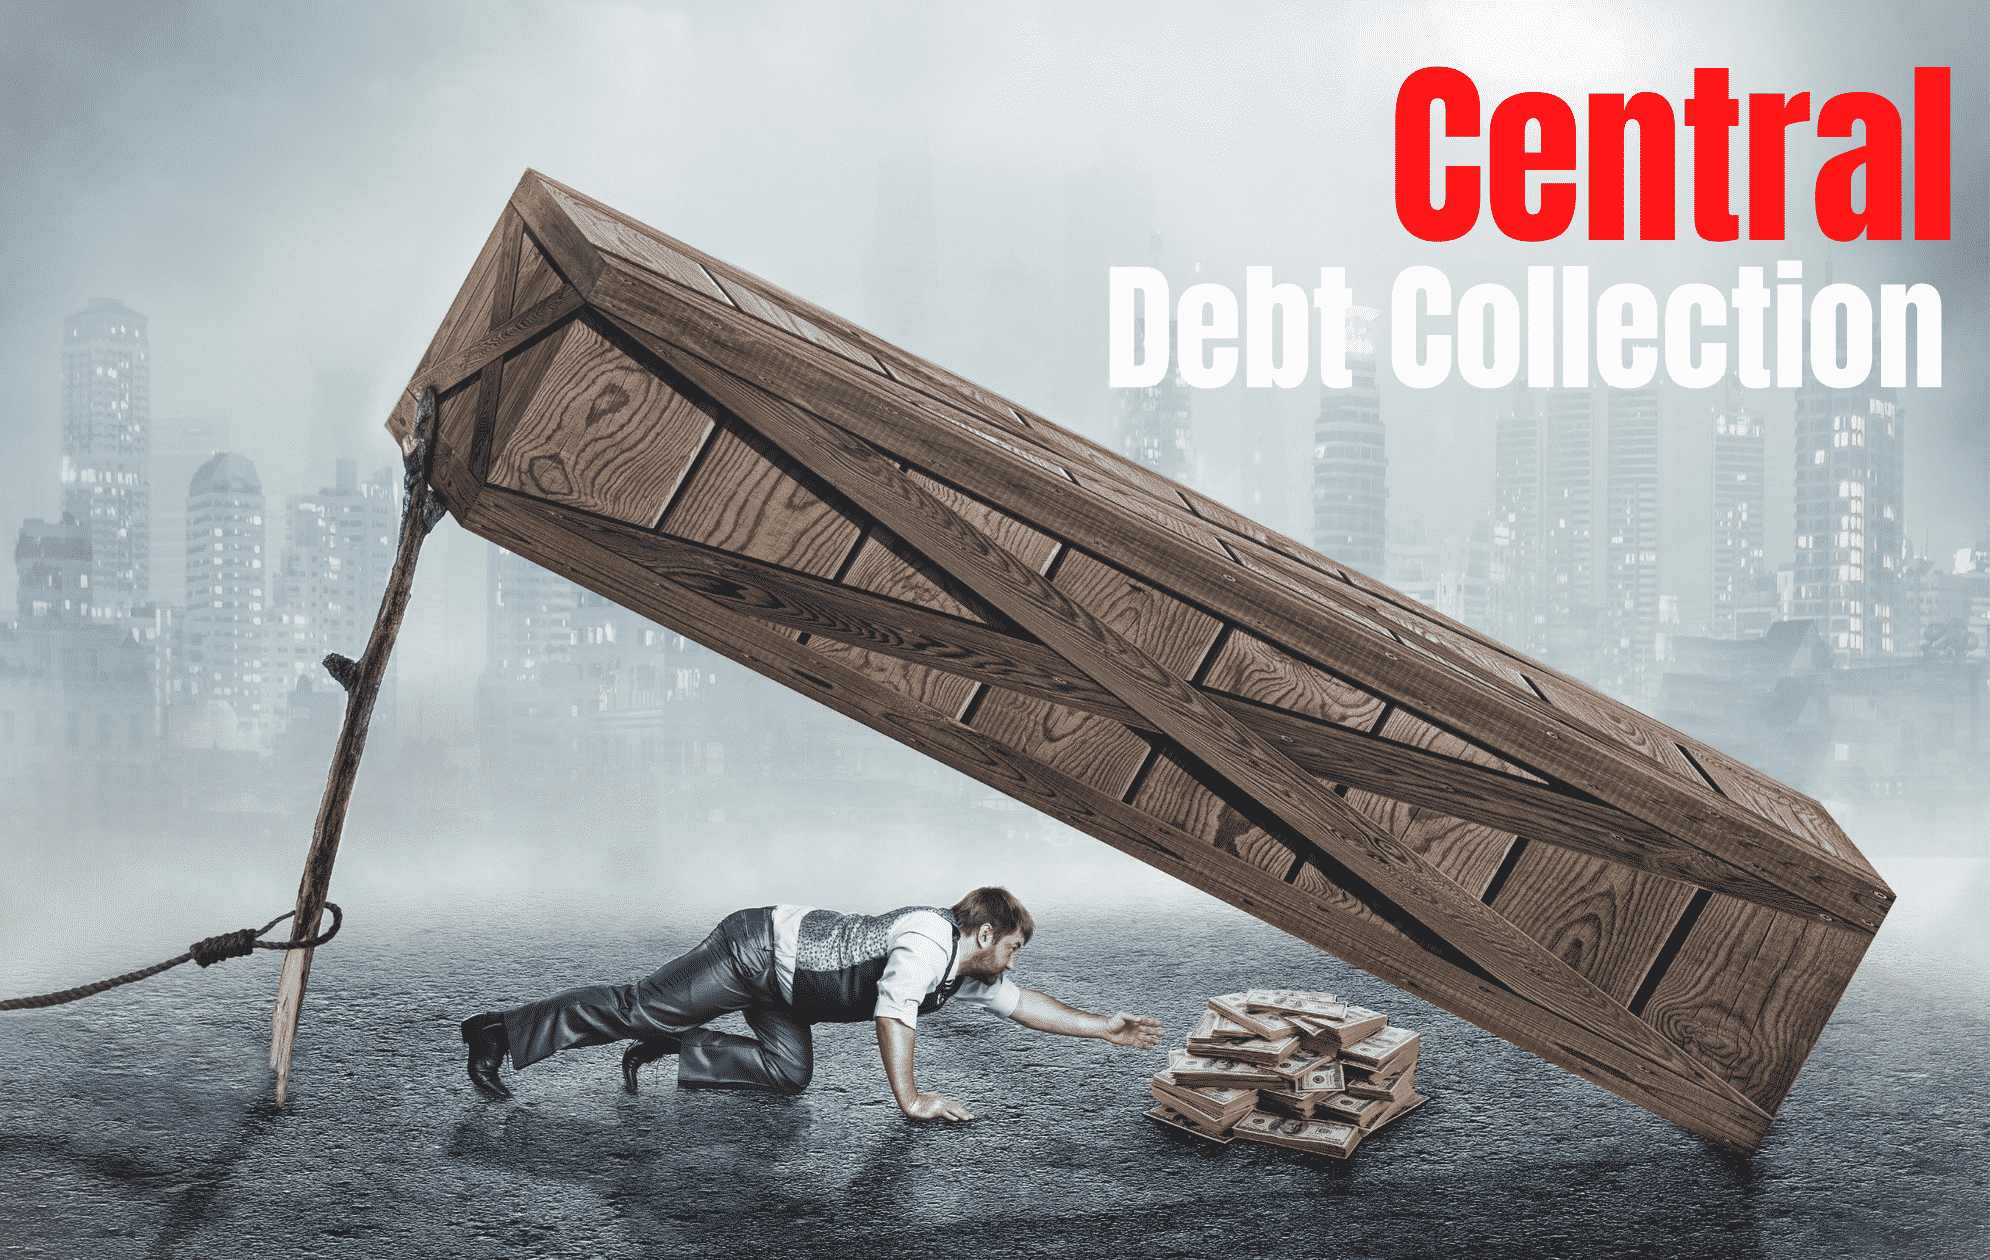 Central-debt-collection